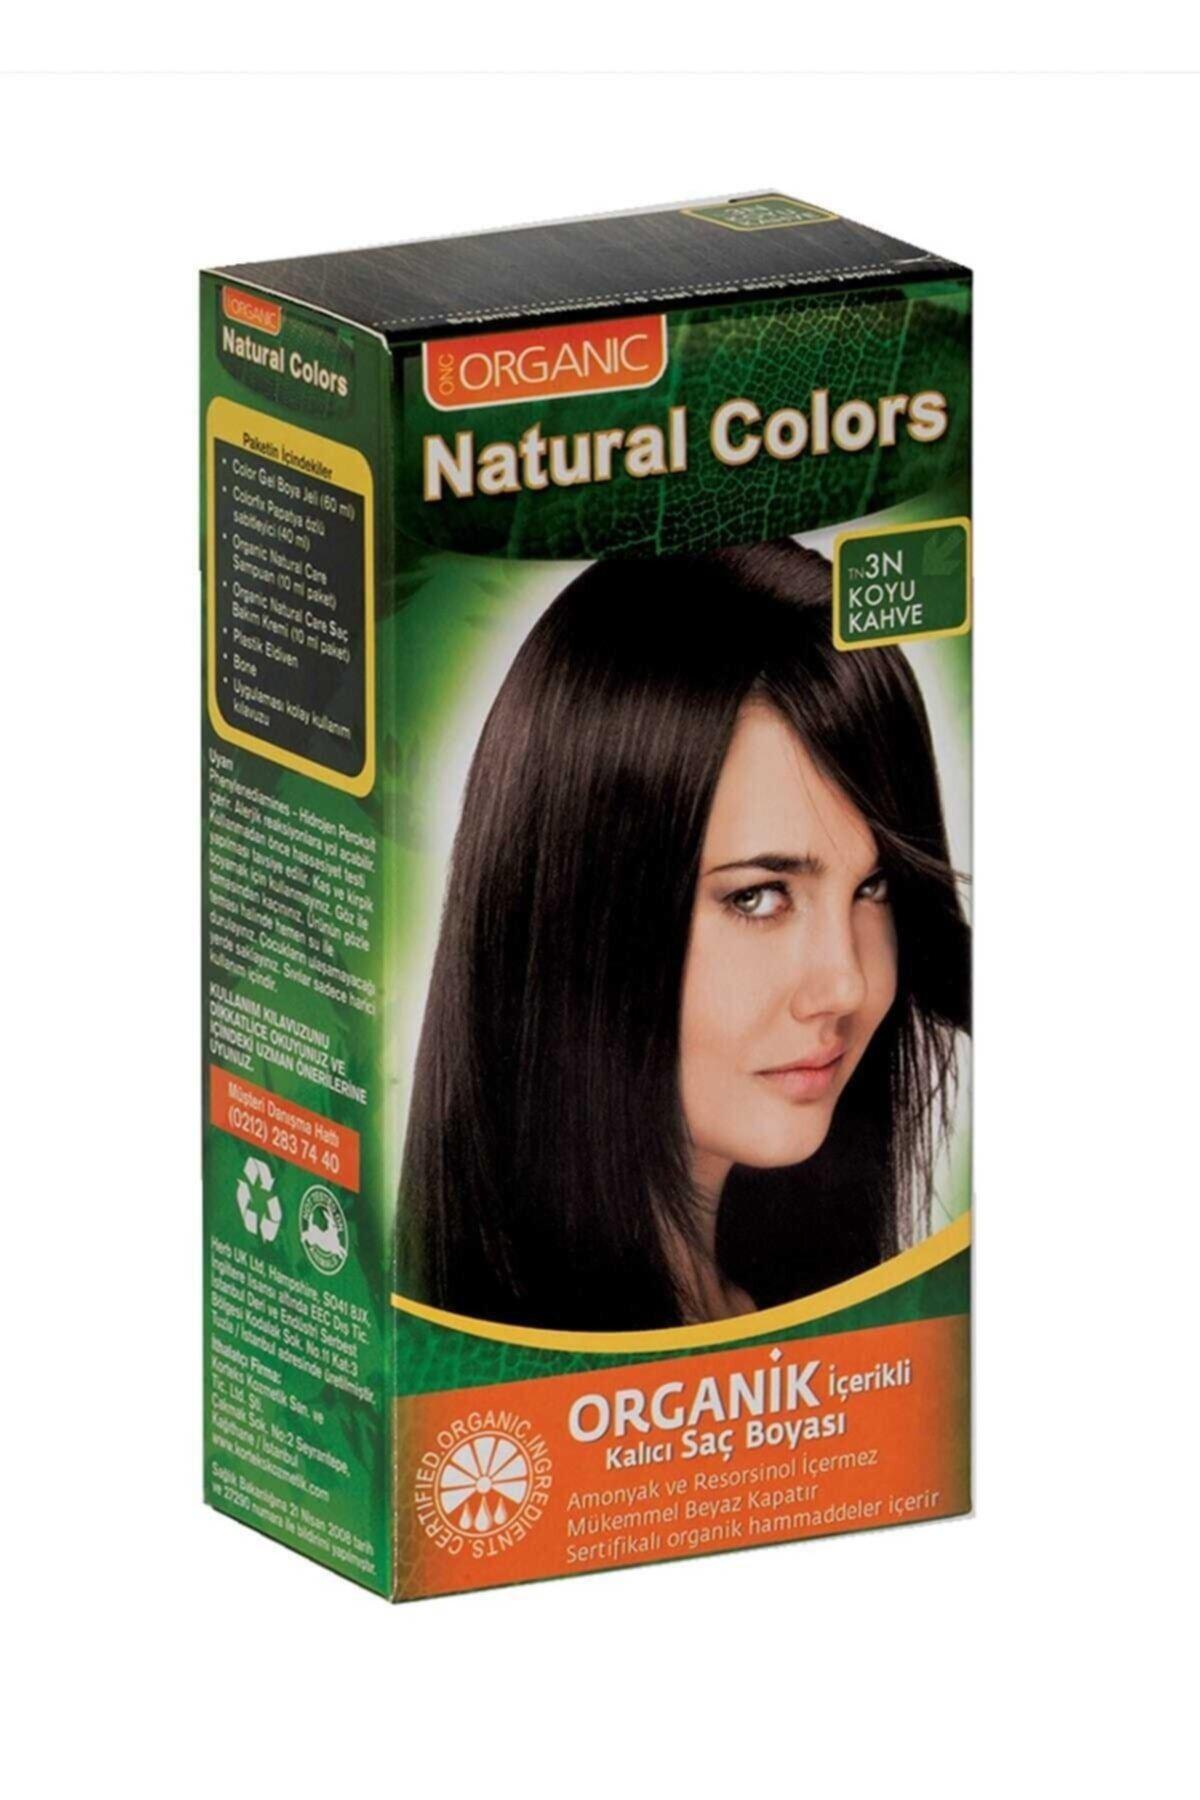 Natural Colors 3N Koyu Kahve Organik Krem Saç Boyası